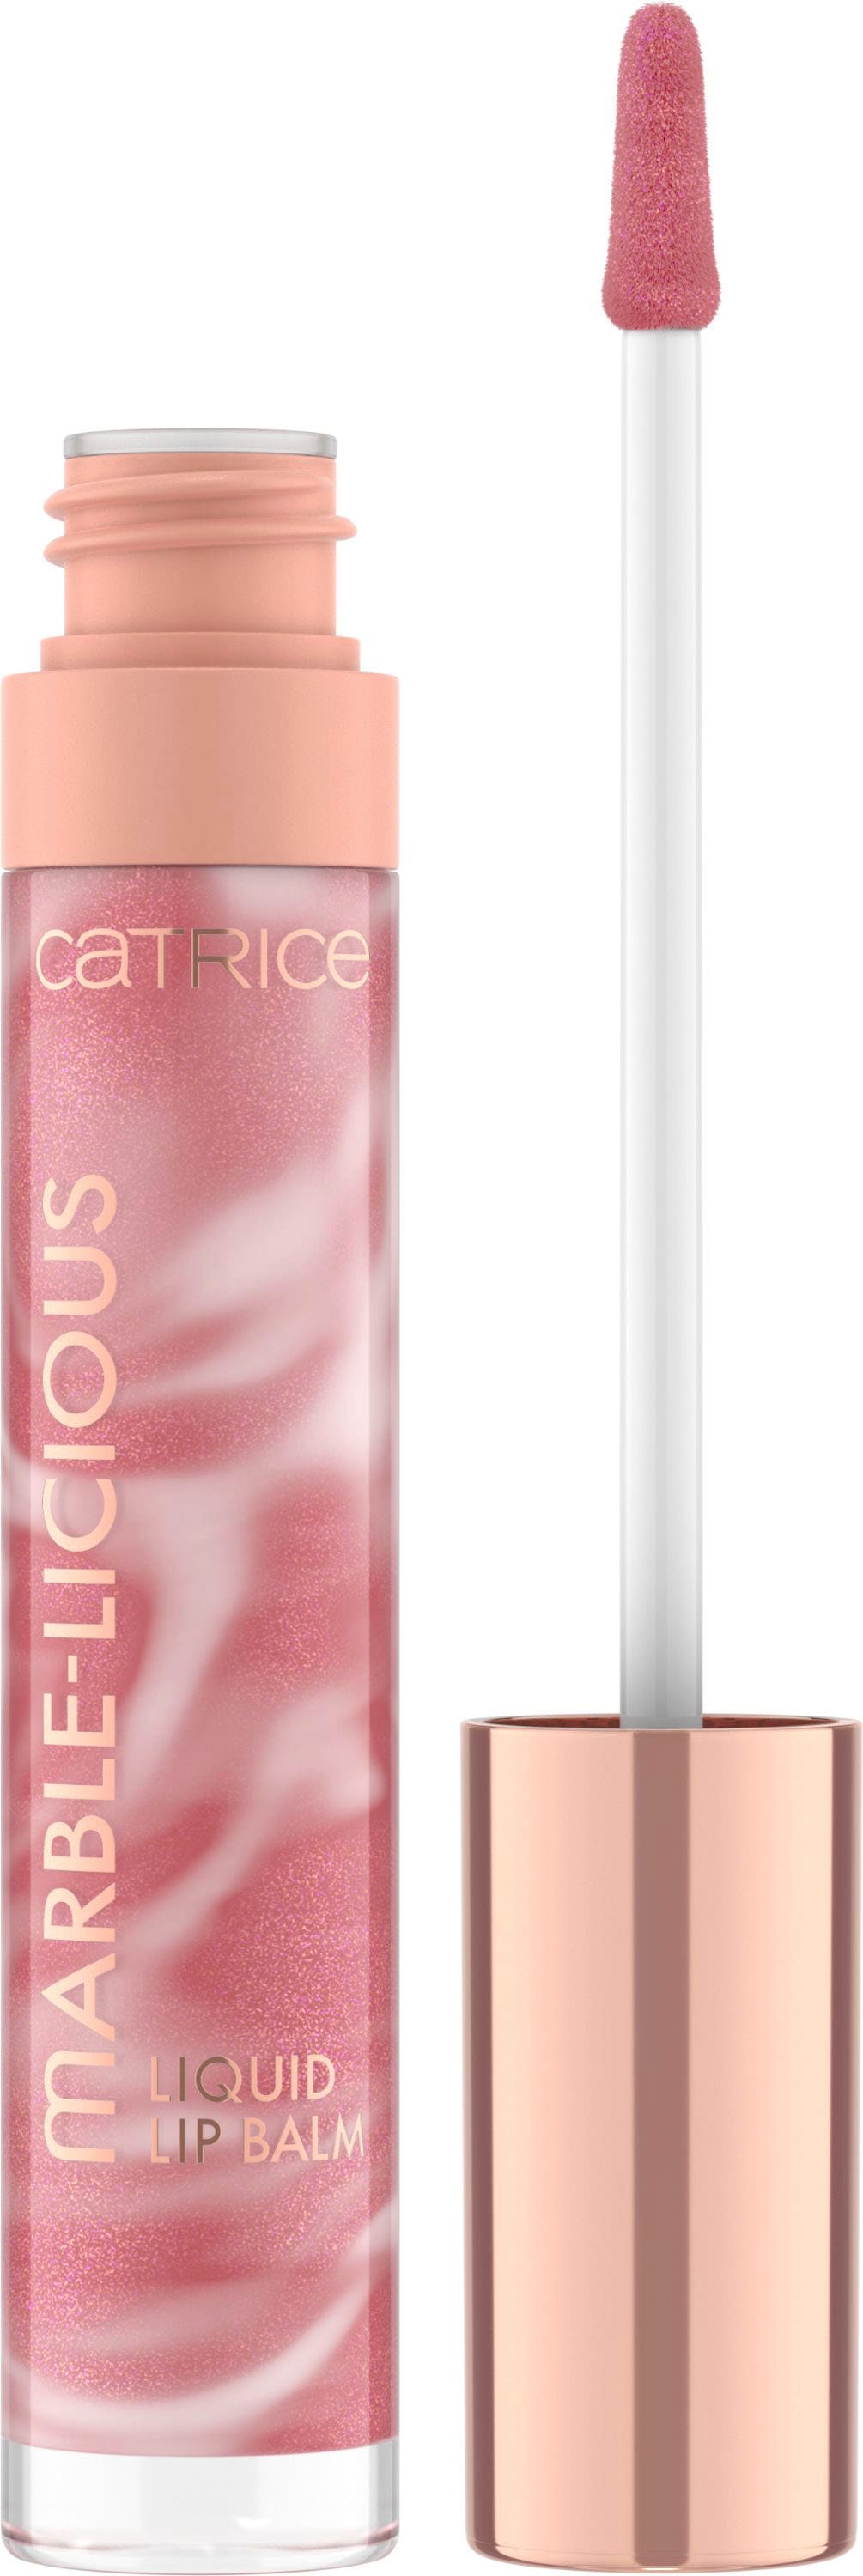 3 Lipgloss Online-Shop Catrice »Marble-licious (Set, Liquid kaufen Balm«, Lip tlg.) im